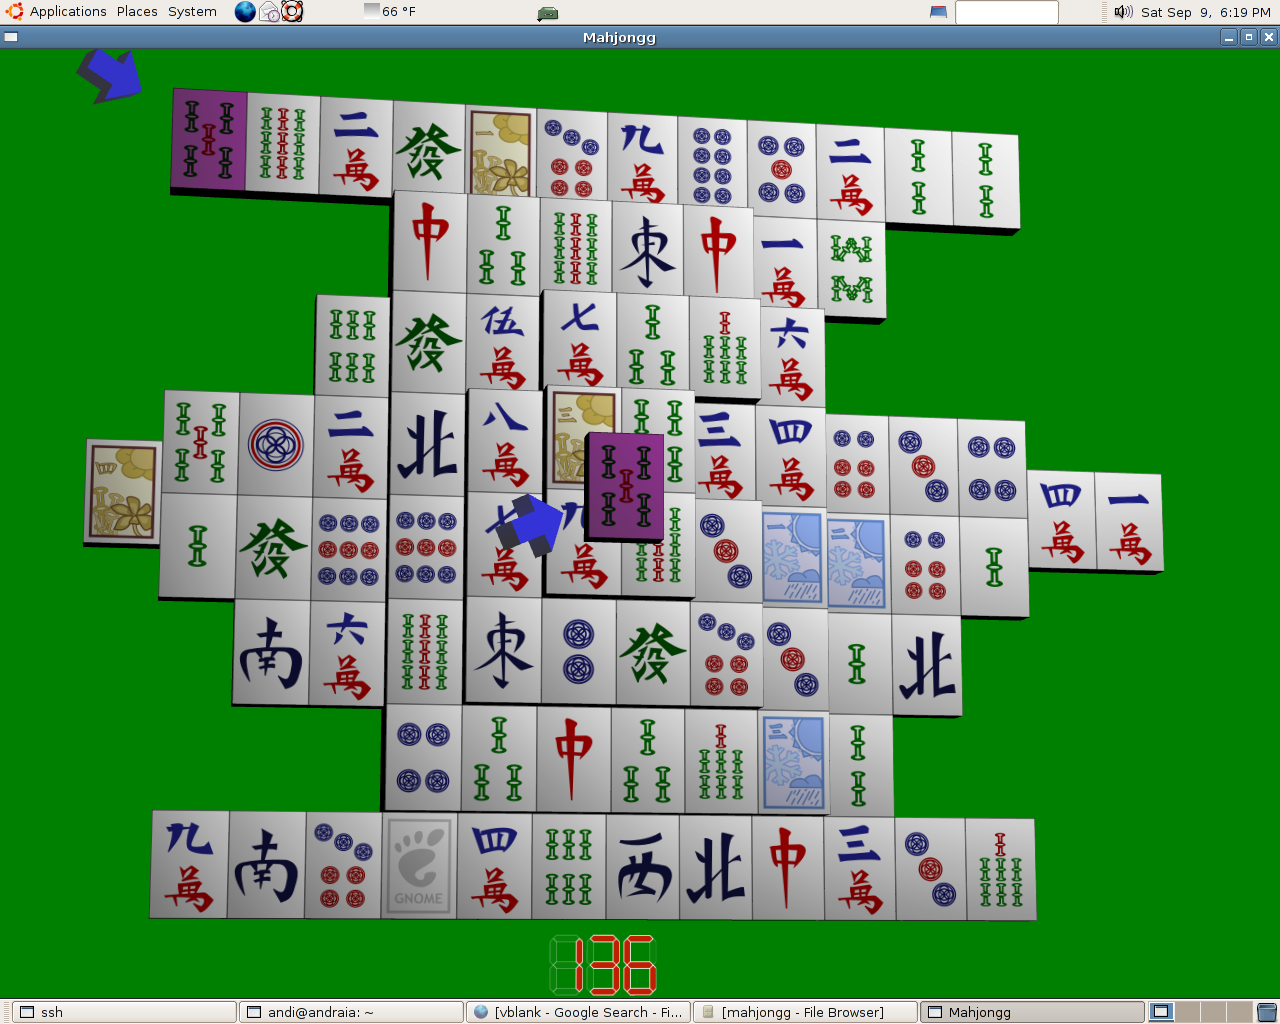 Mahjong solitaire